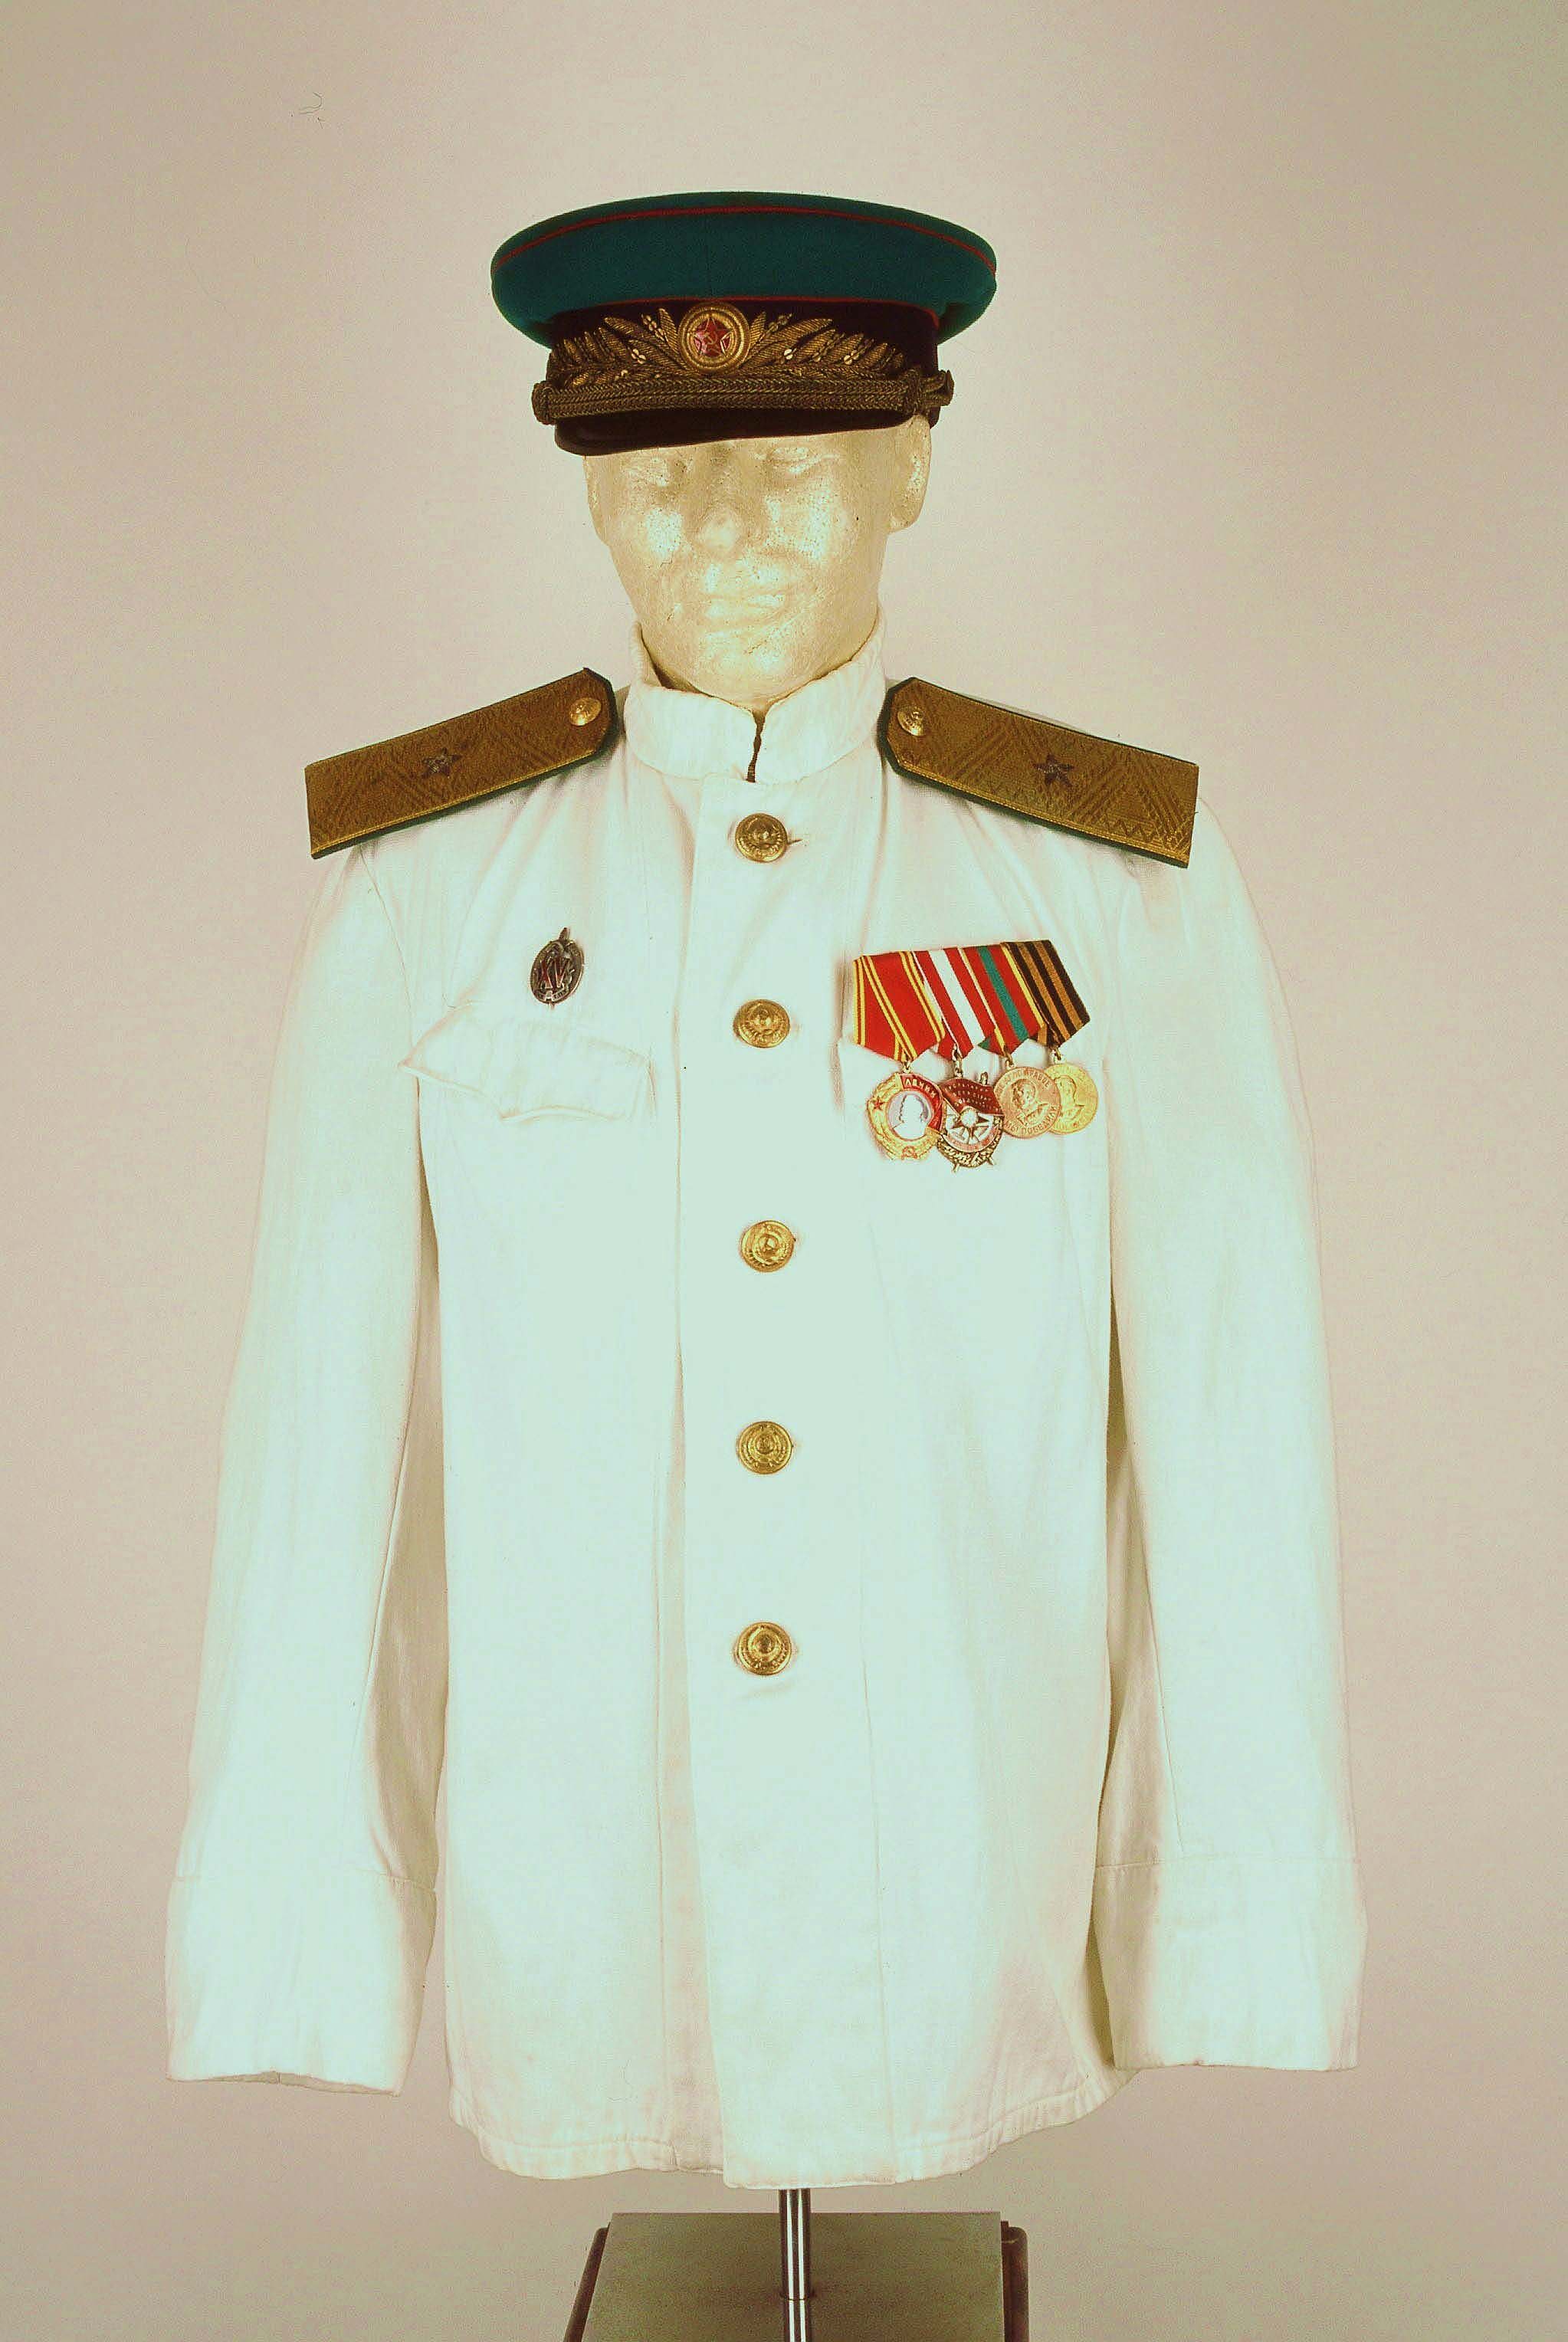 The Uniforms - The Sinclair Collection - Uniforms